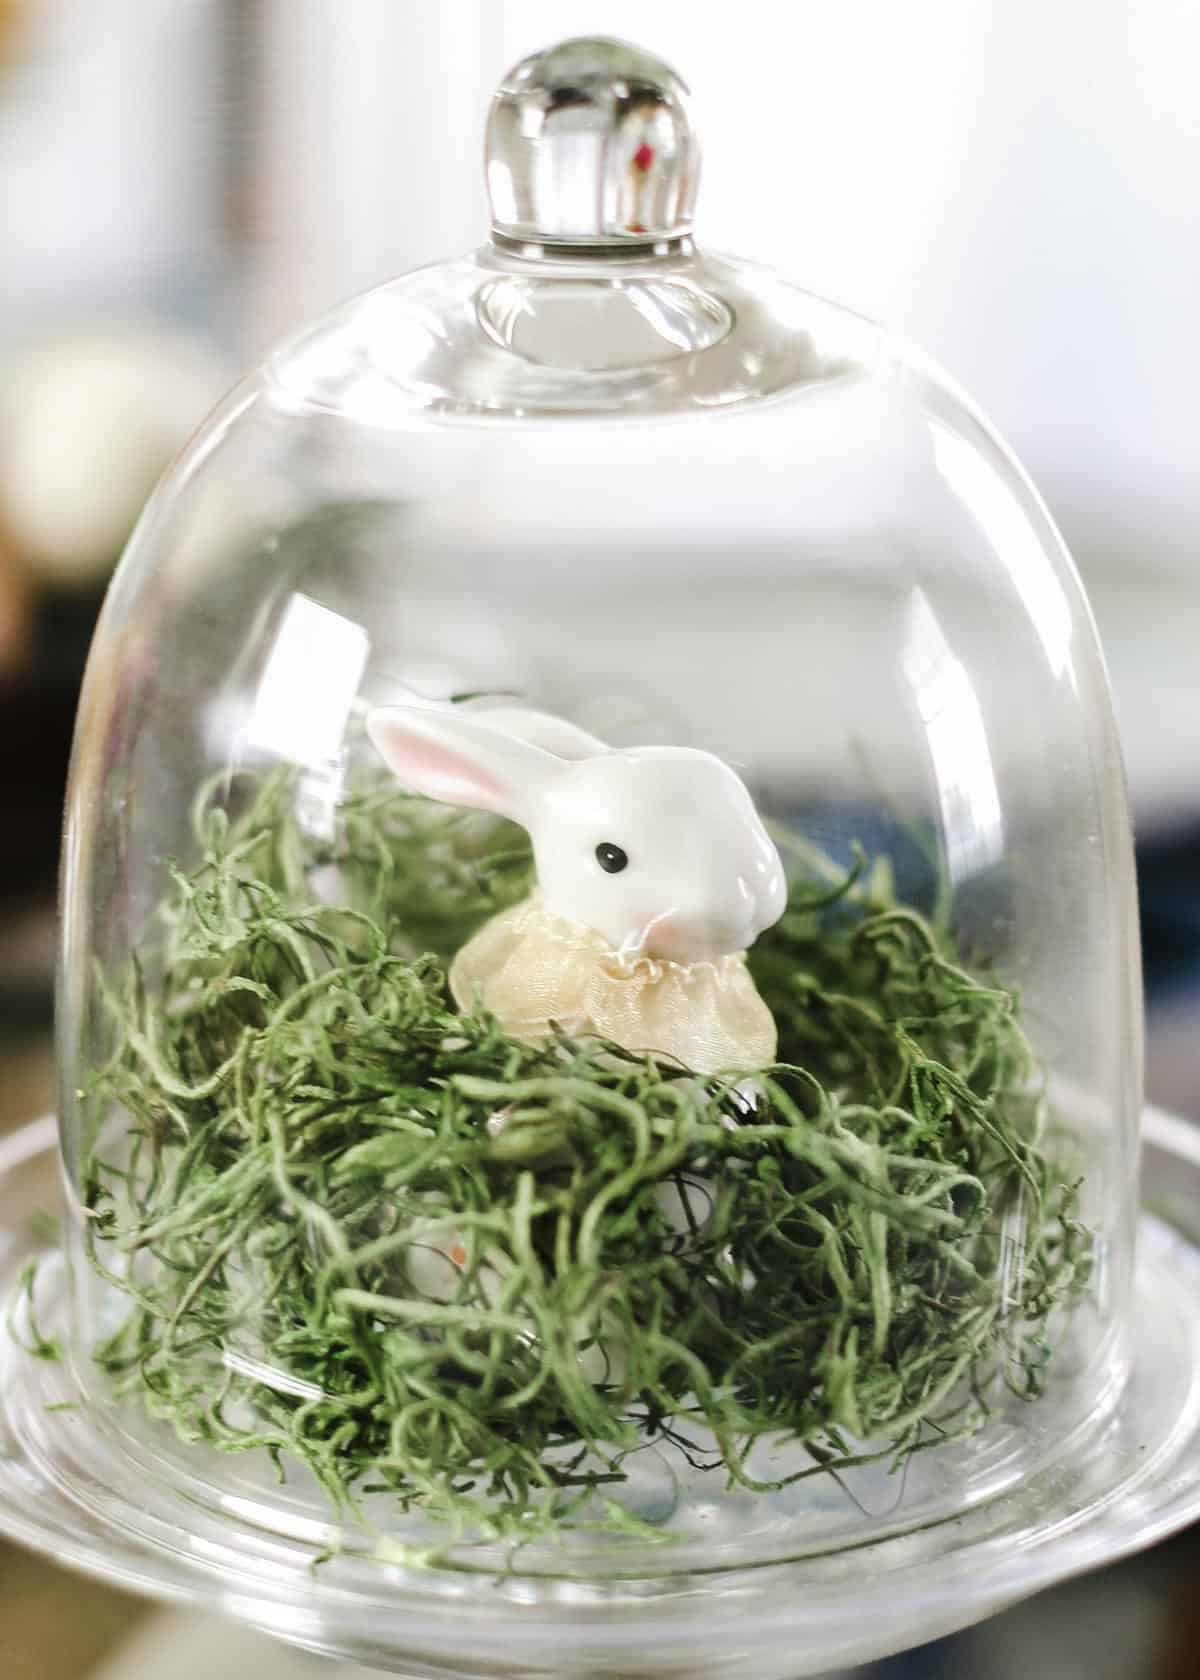 tiny rabbit figurine in green nest under glass cloche.